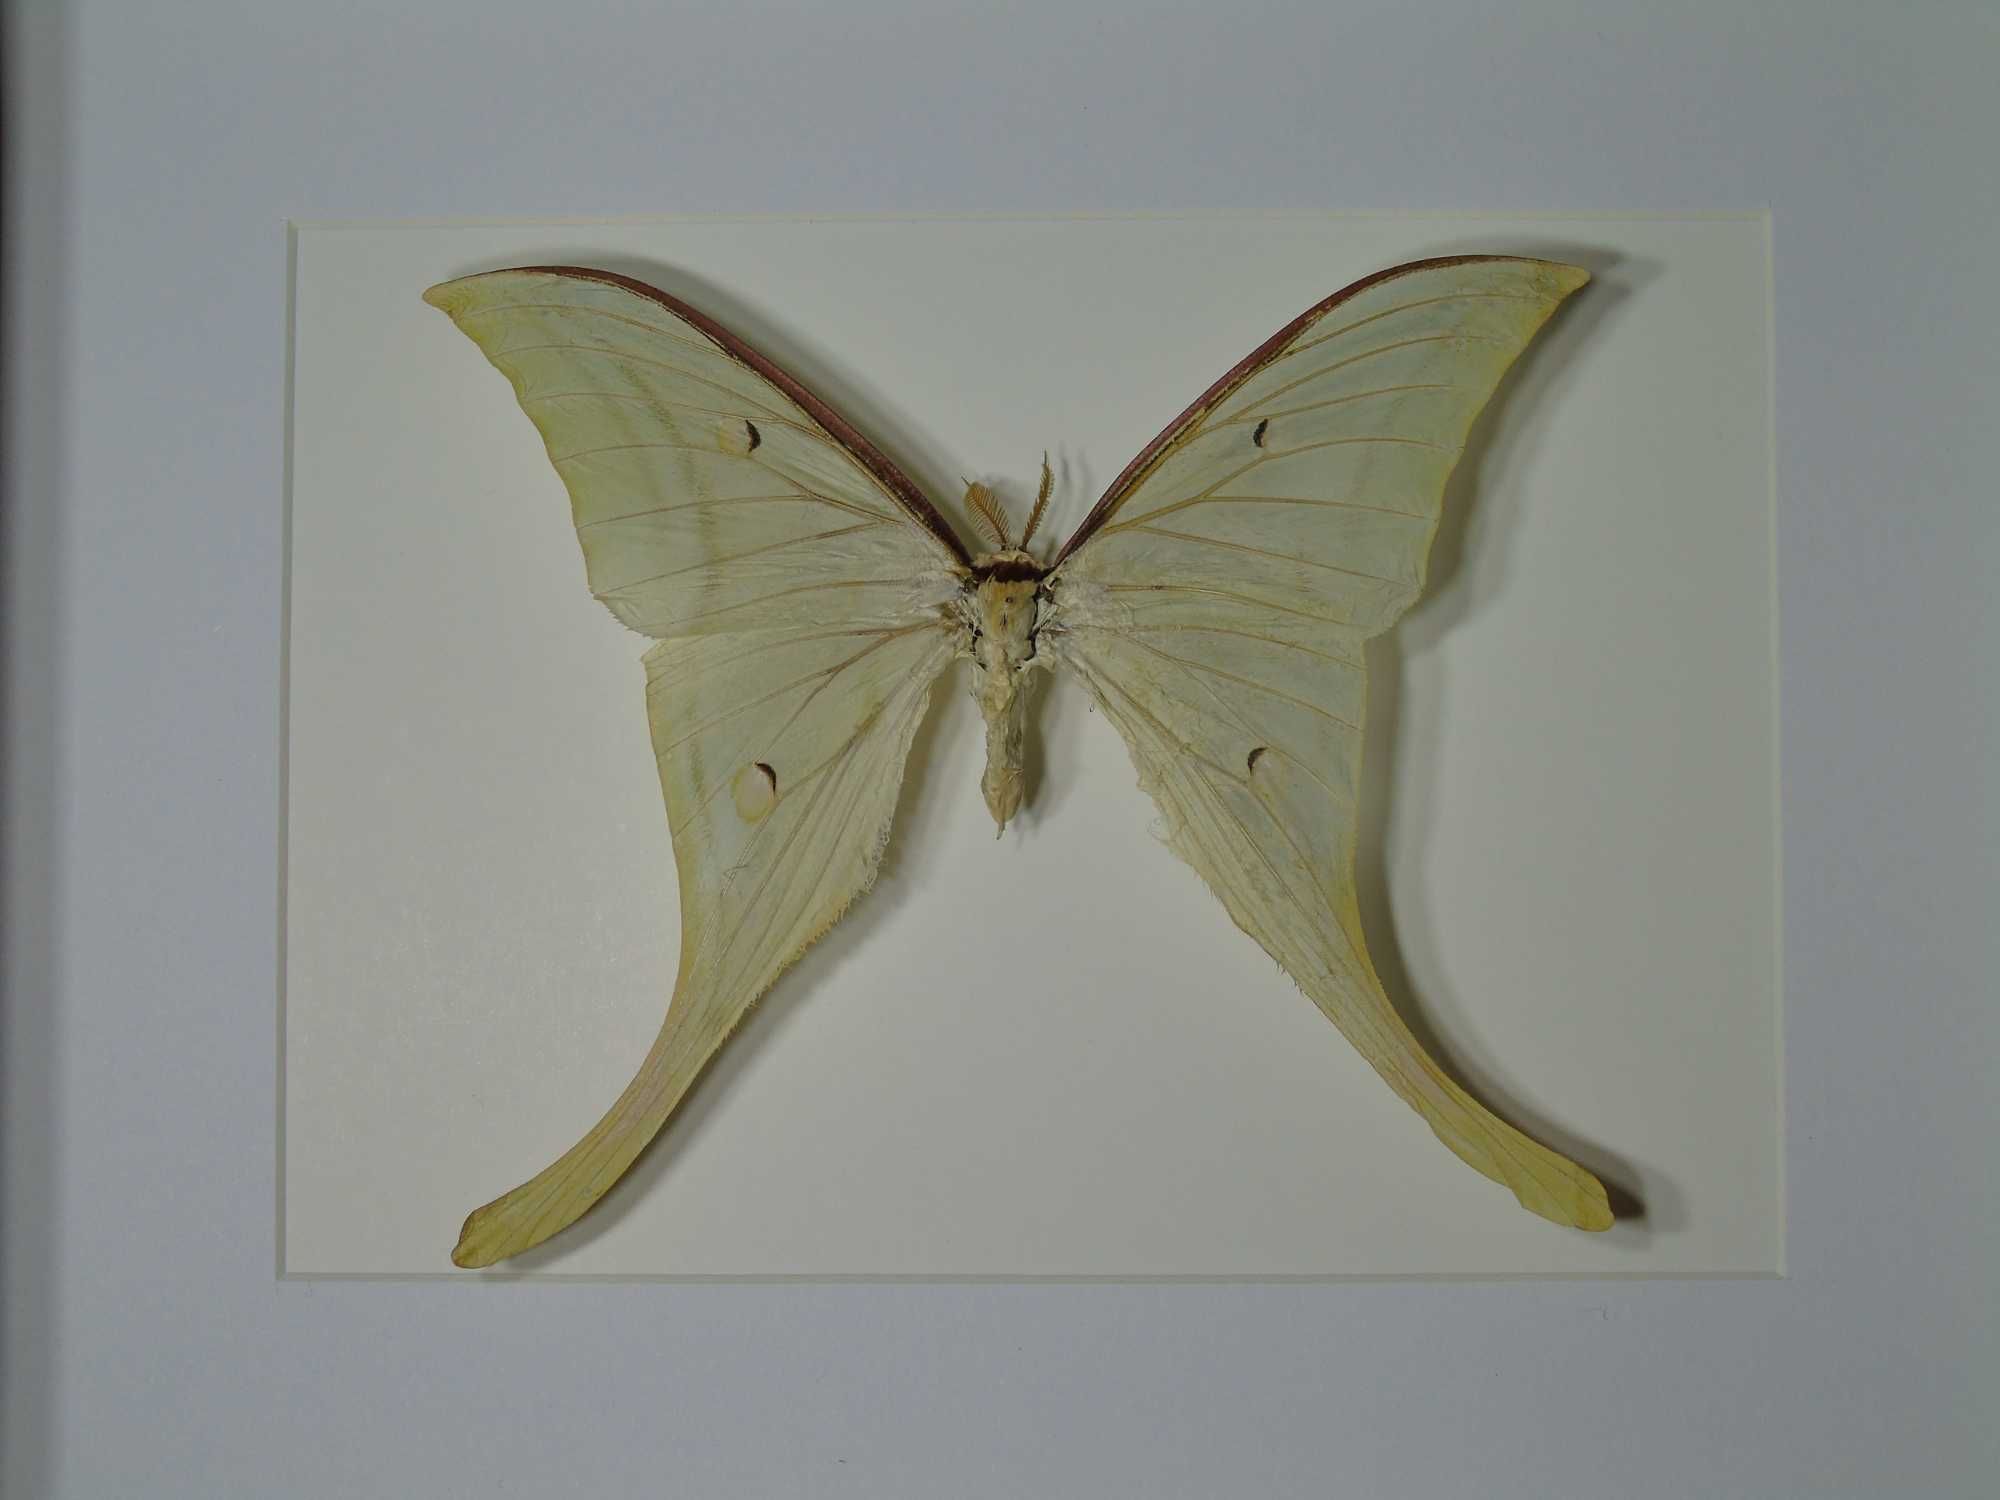 Motyl w ramce / gablotce 27 x 22 cm . Actias ningpoana - Chiny .